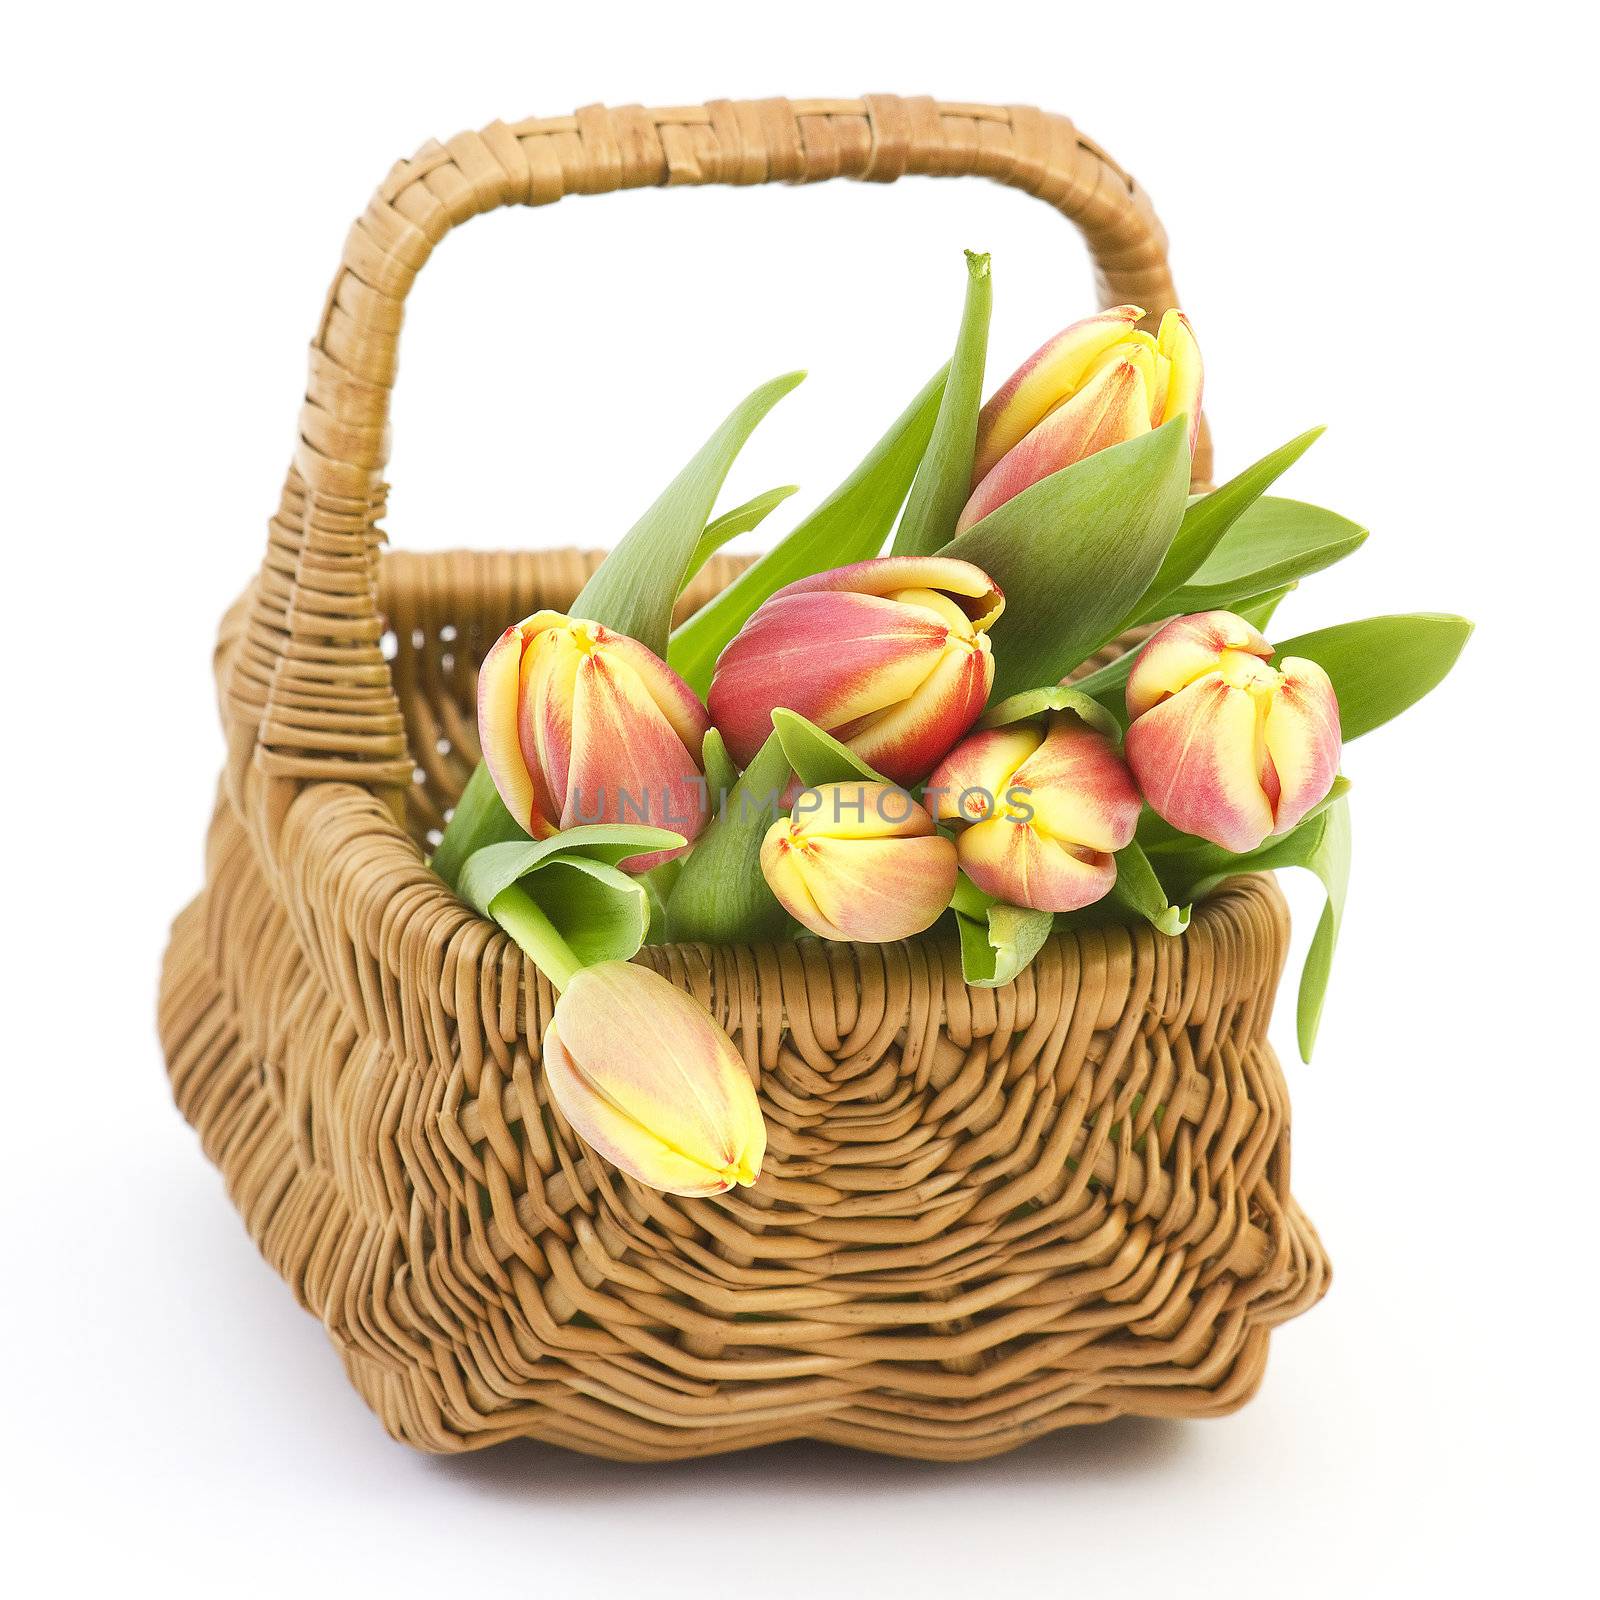 fresh tulips by miradrozdowski